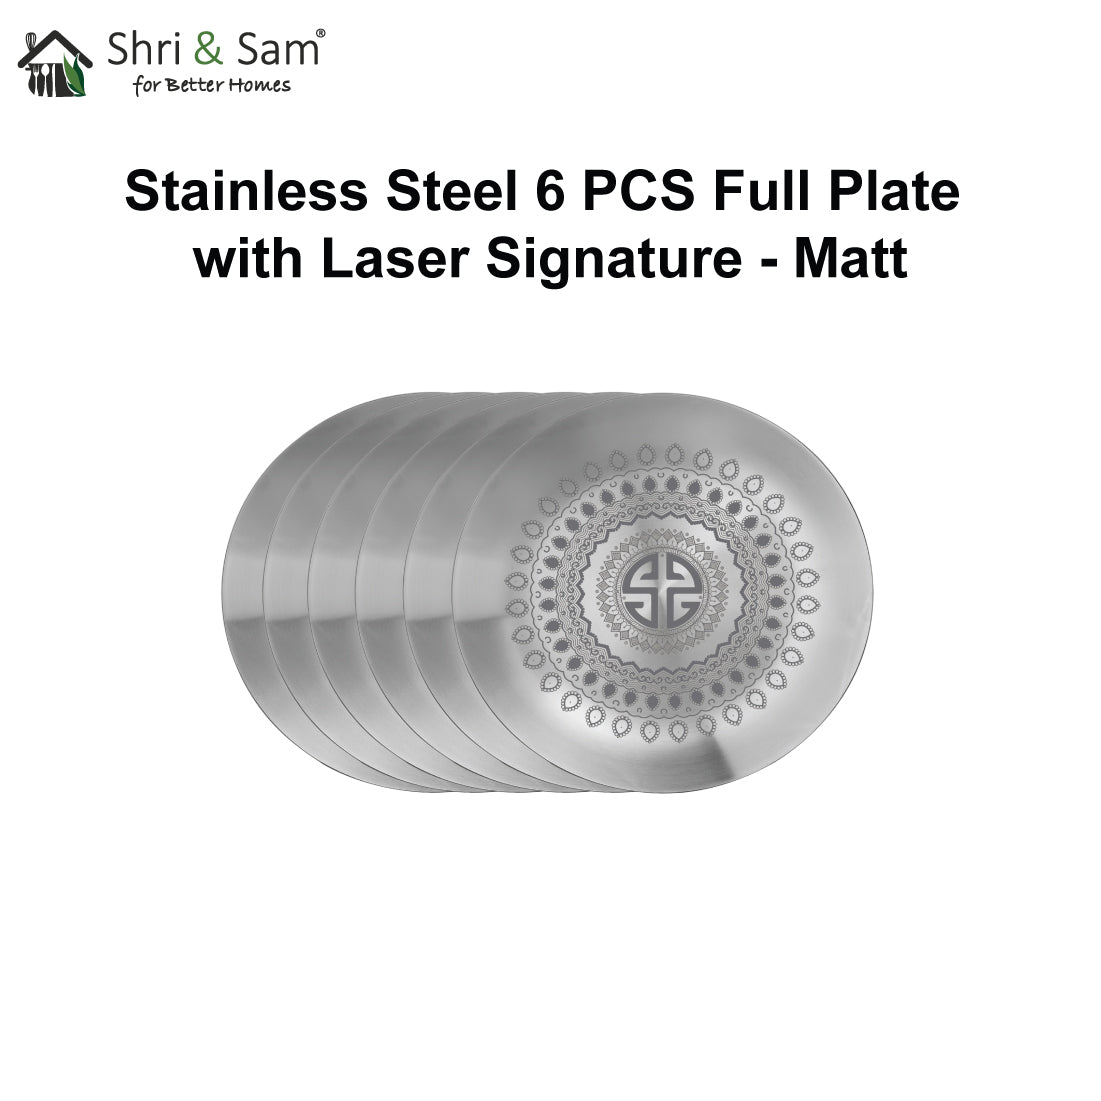 Stainless Steel 6 PCS Full Plate with Laser Signature - Matt